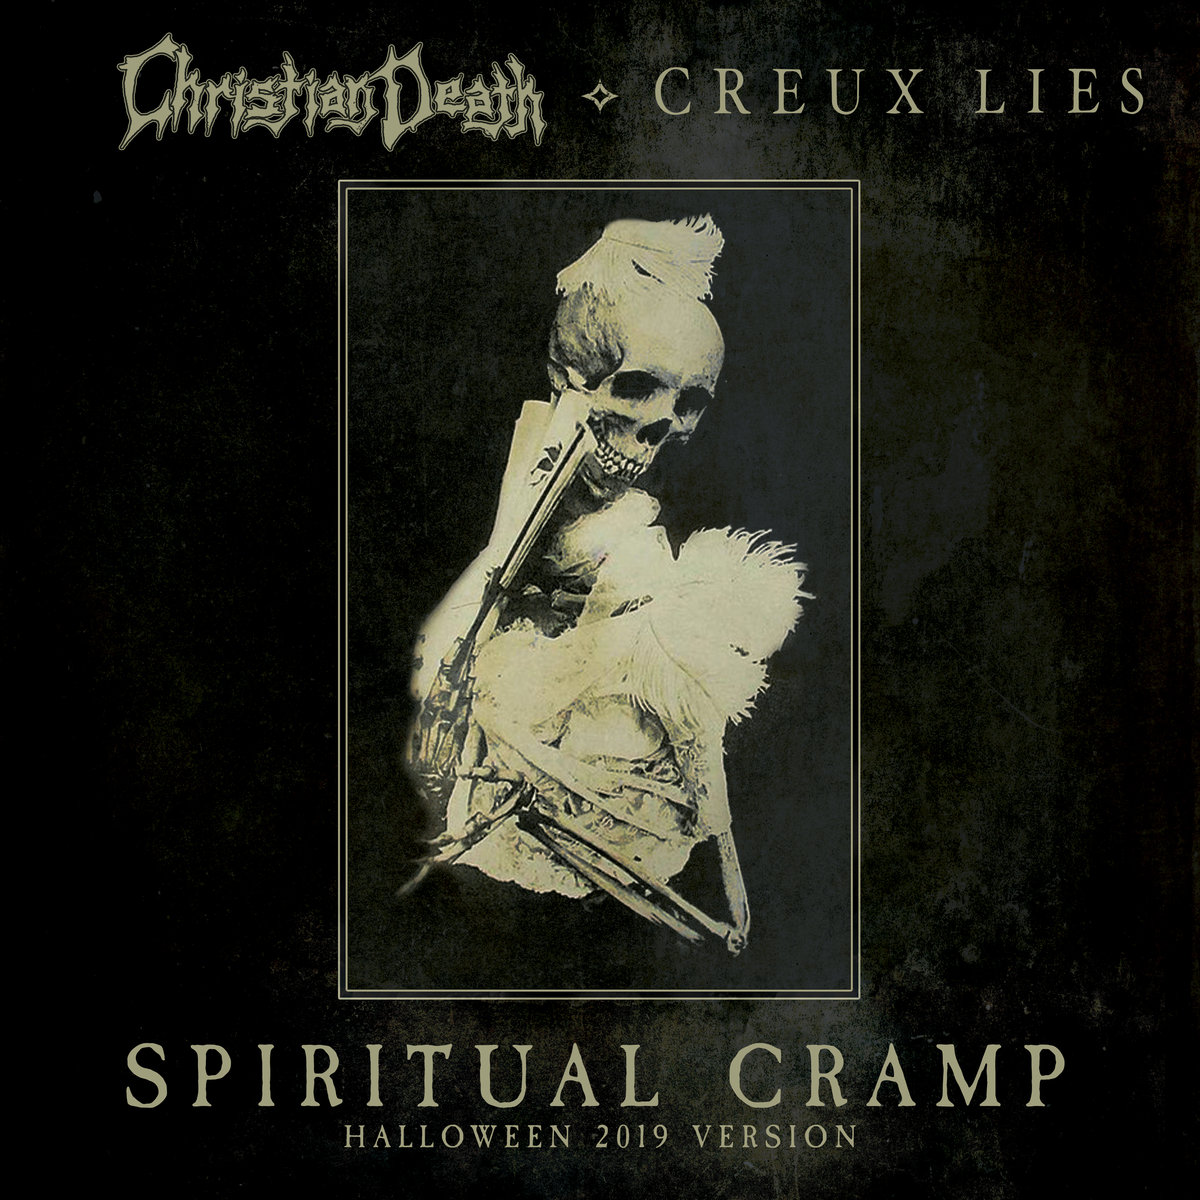 Single of the week – Creux Lies – Spiritual Cramp (Christian Death) – Halloween 2019 Version